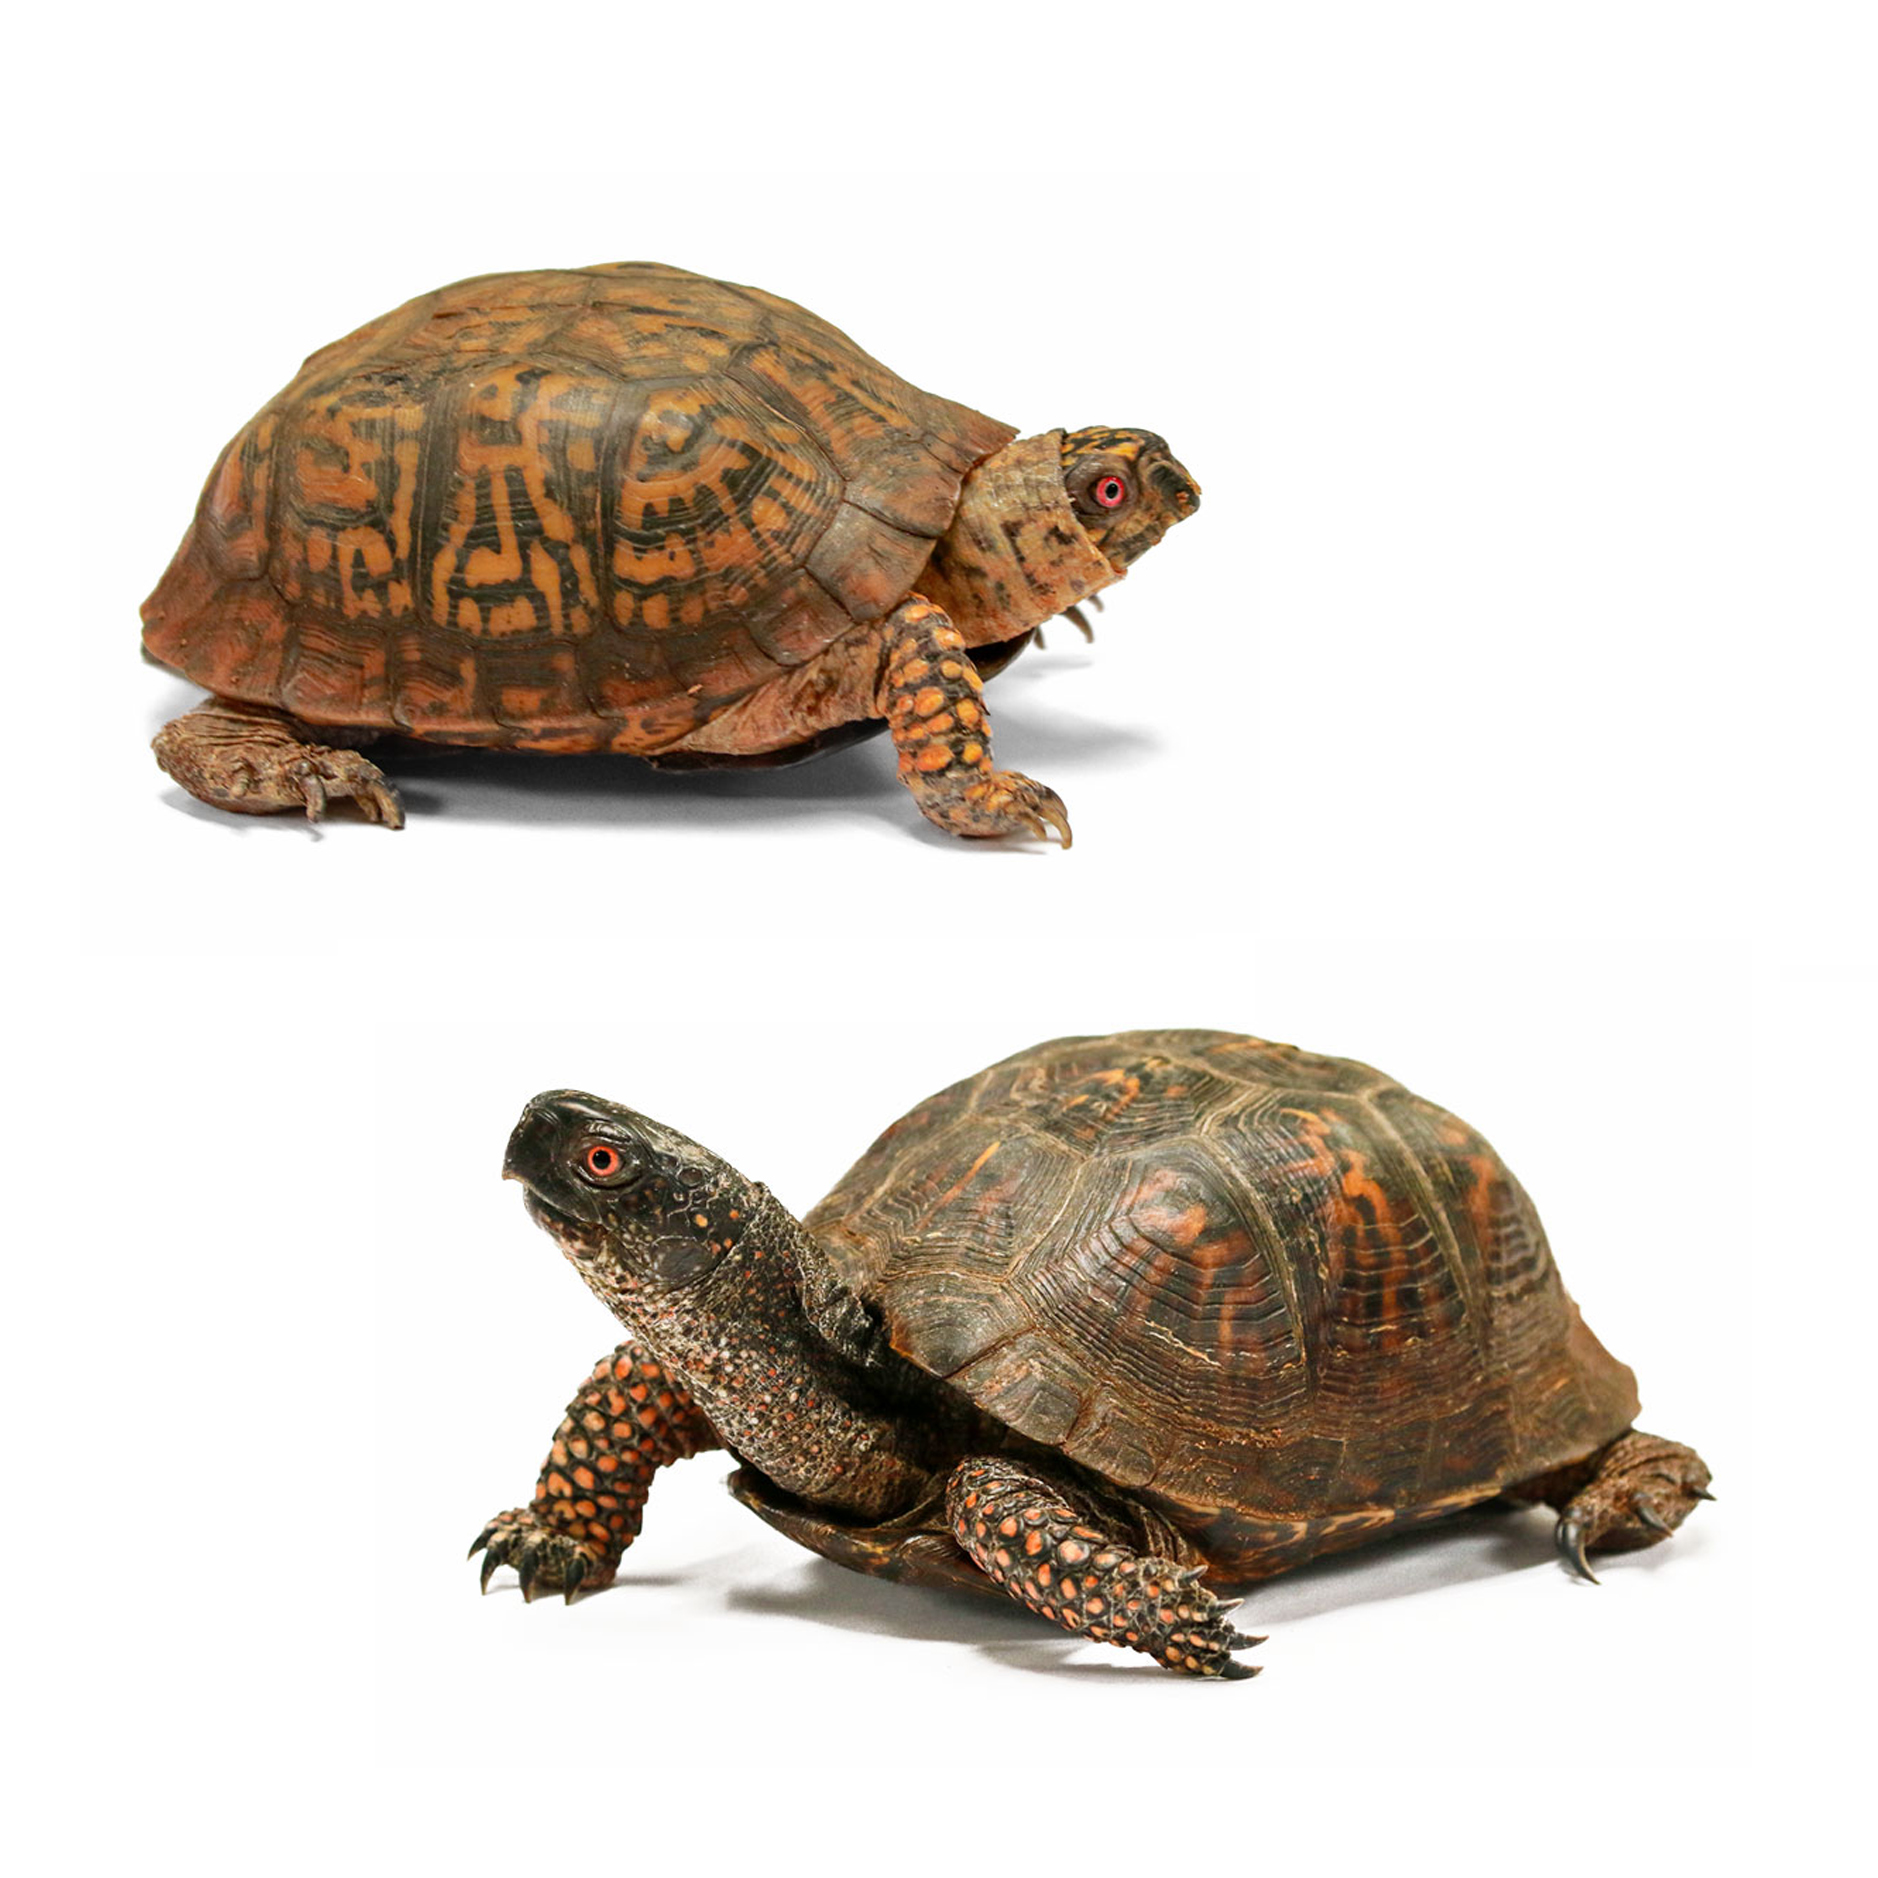 Two eastern box turtles named Bert and Earnie.